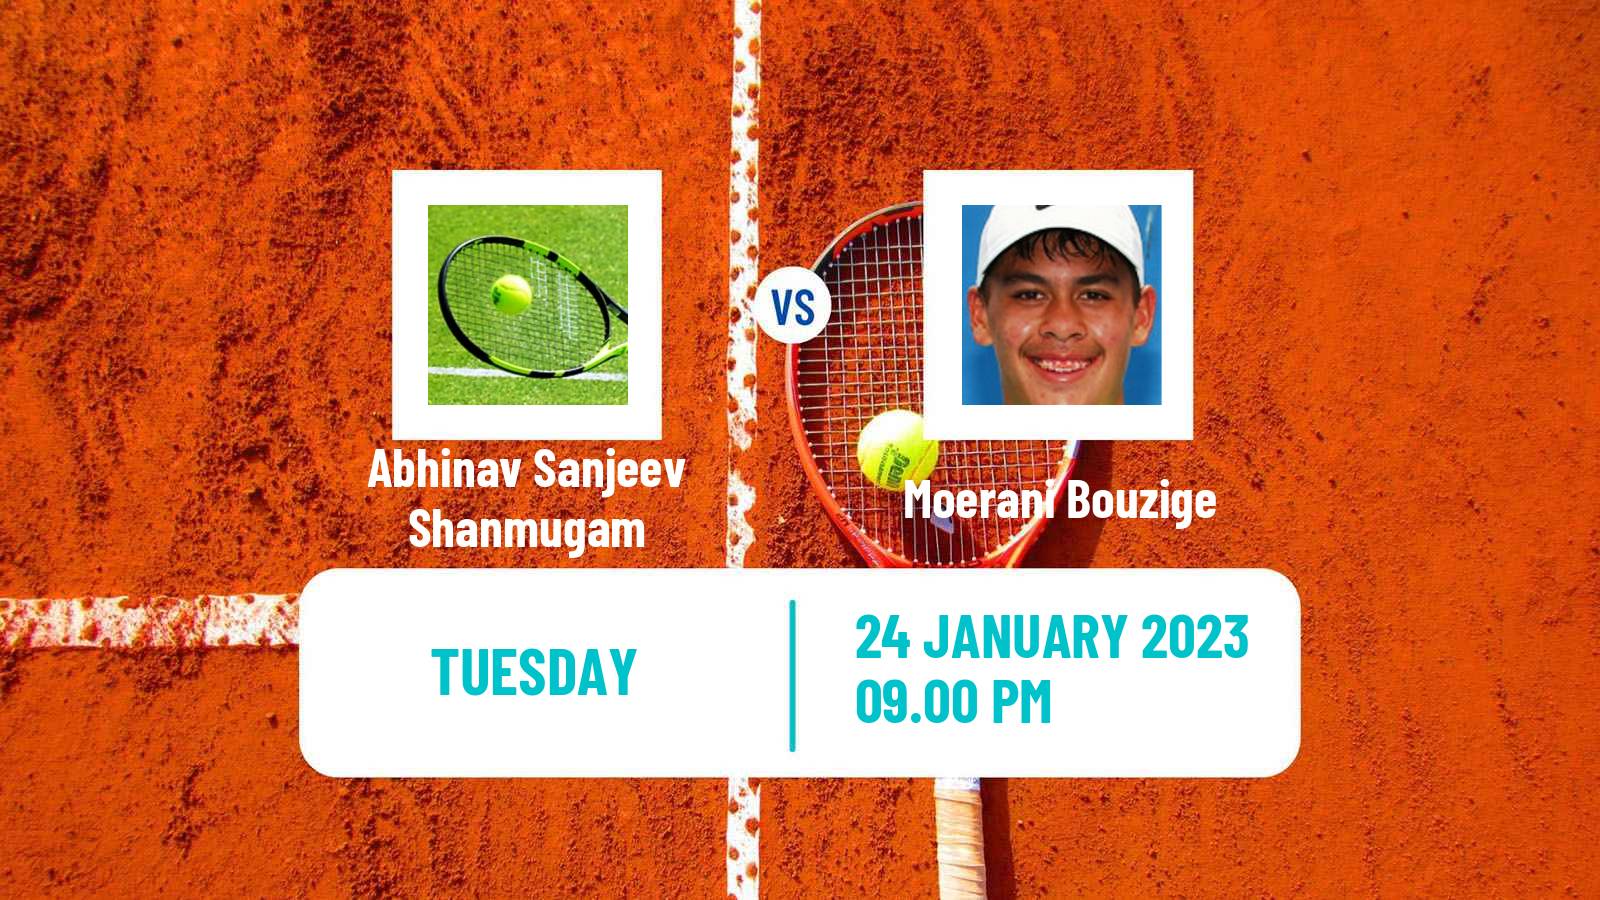 Tennis ITF Tournaments Abhinav Sanjeev Shanmugam - Moerani Bouzige